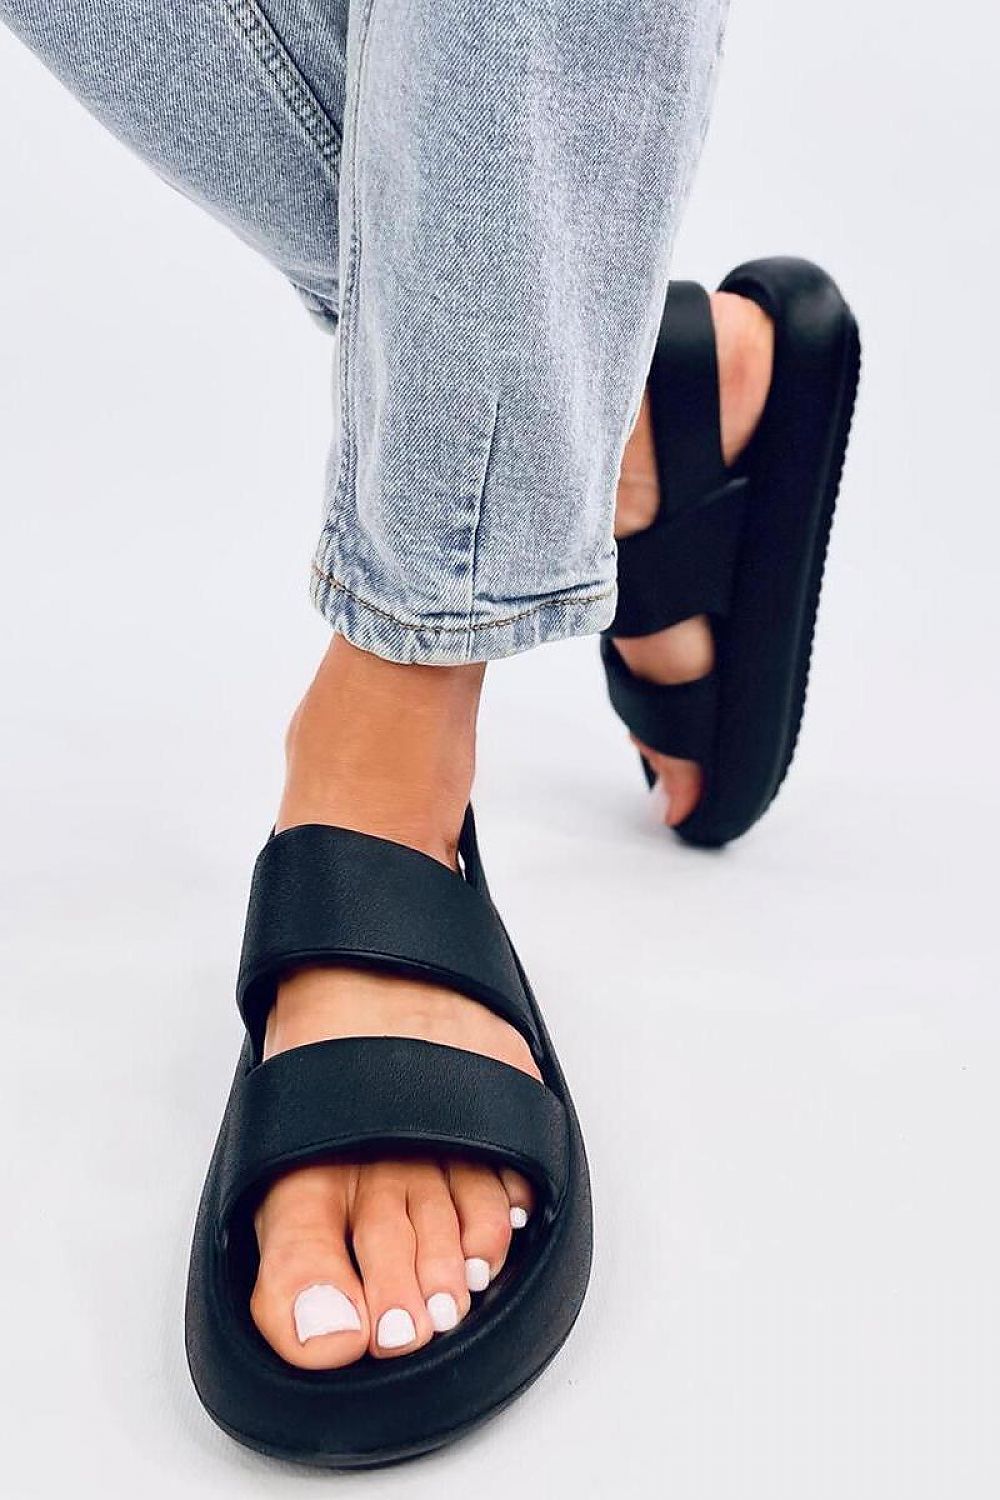 TEEK - Black Rubber Strapped Sandals SHOES TEEK Trend 6  